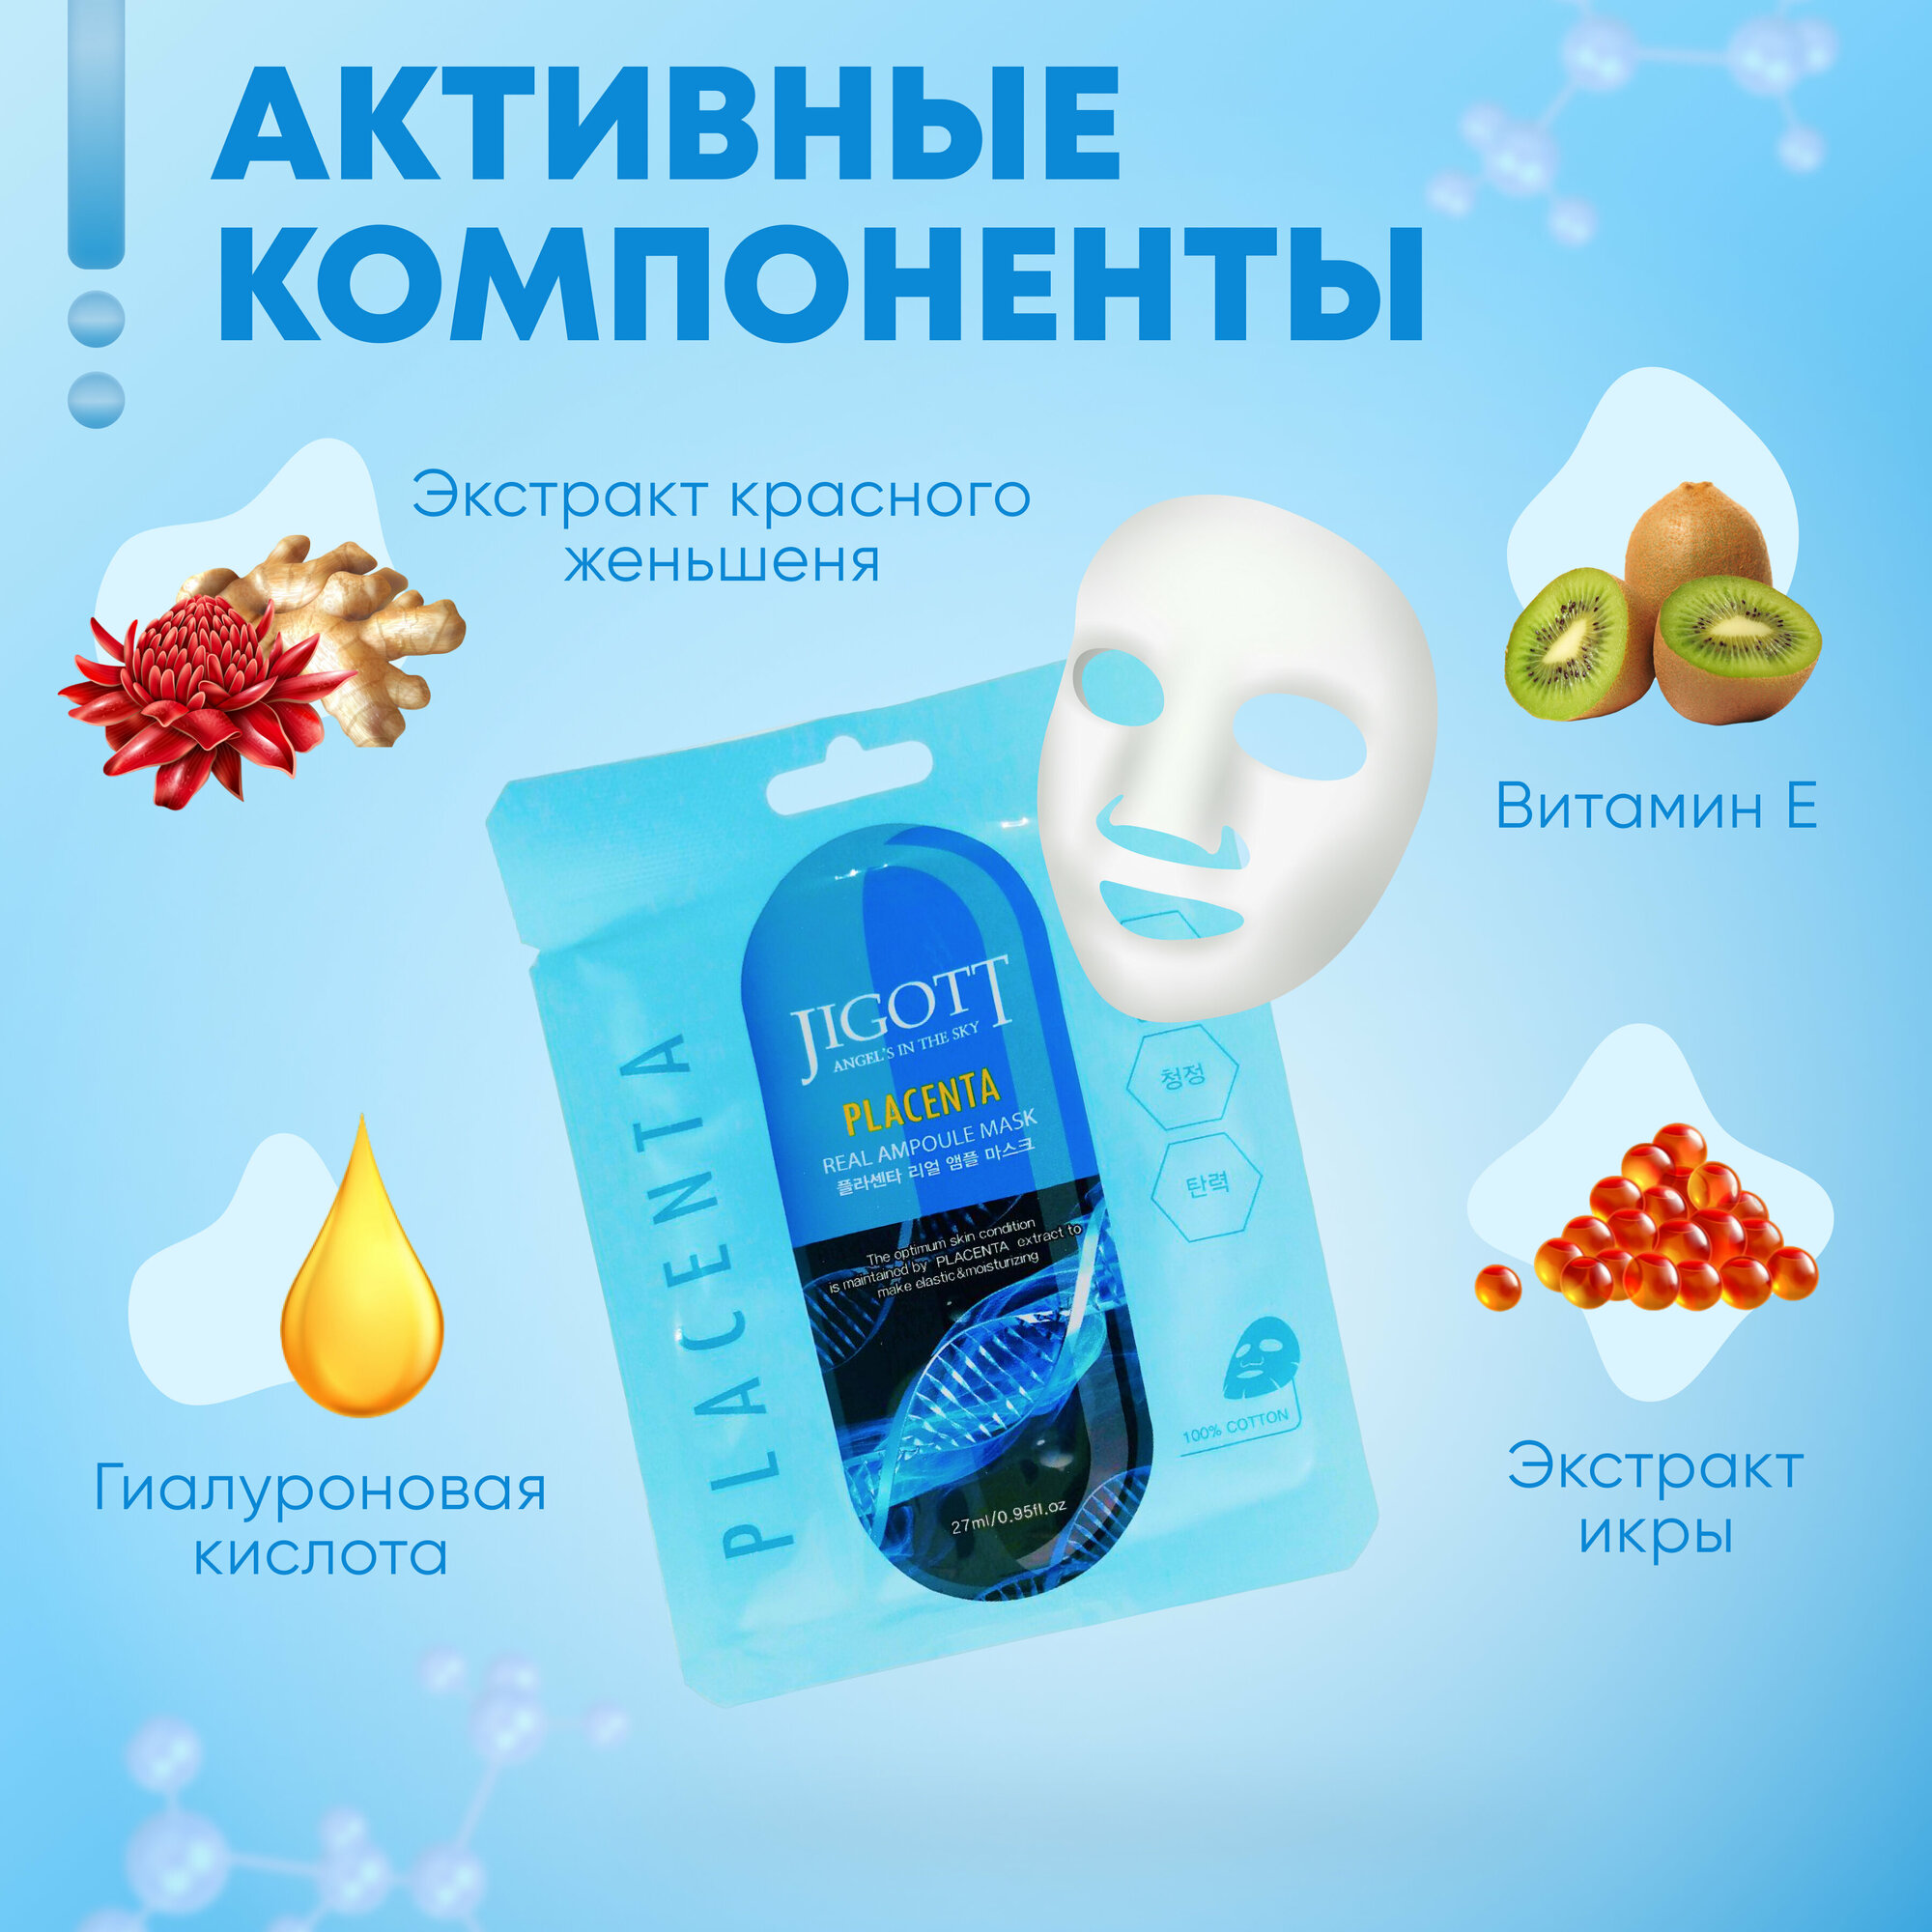 Jigott Маски для лица тканевые набор 10 шт по 27 мл с плацентой Placenta Real Ampoule Mask для ухода за кожей лица Корея